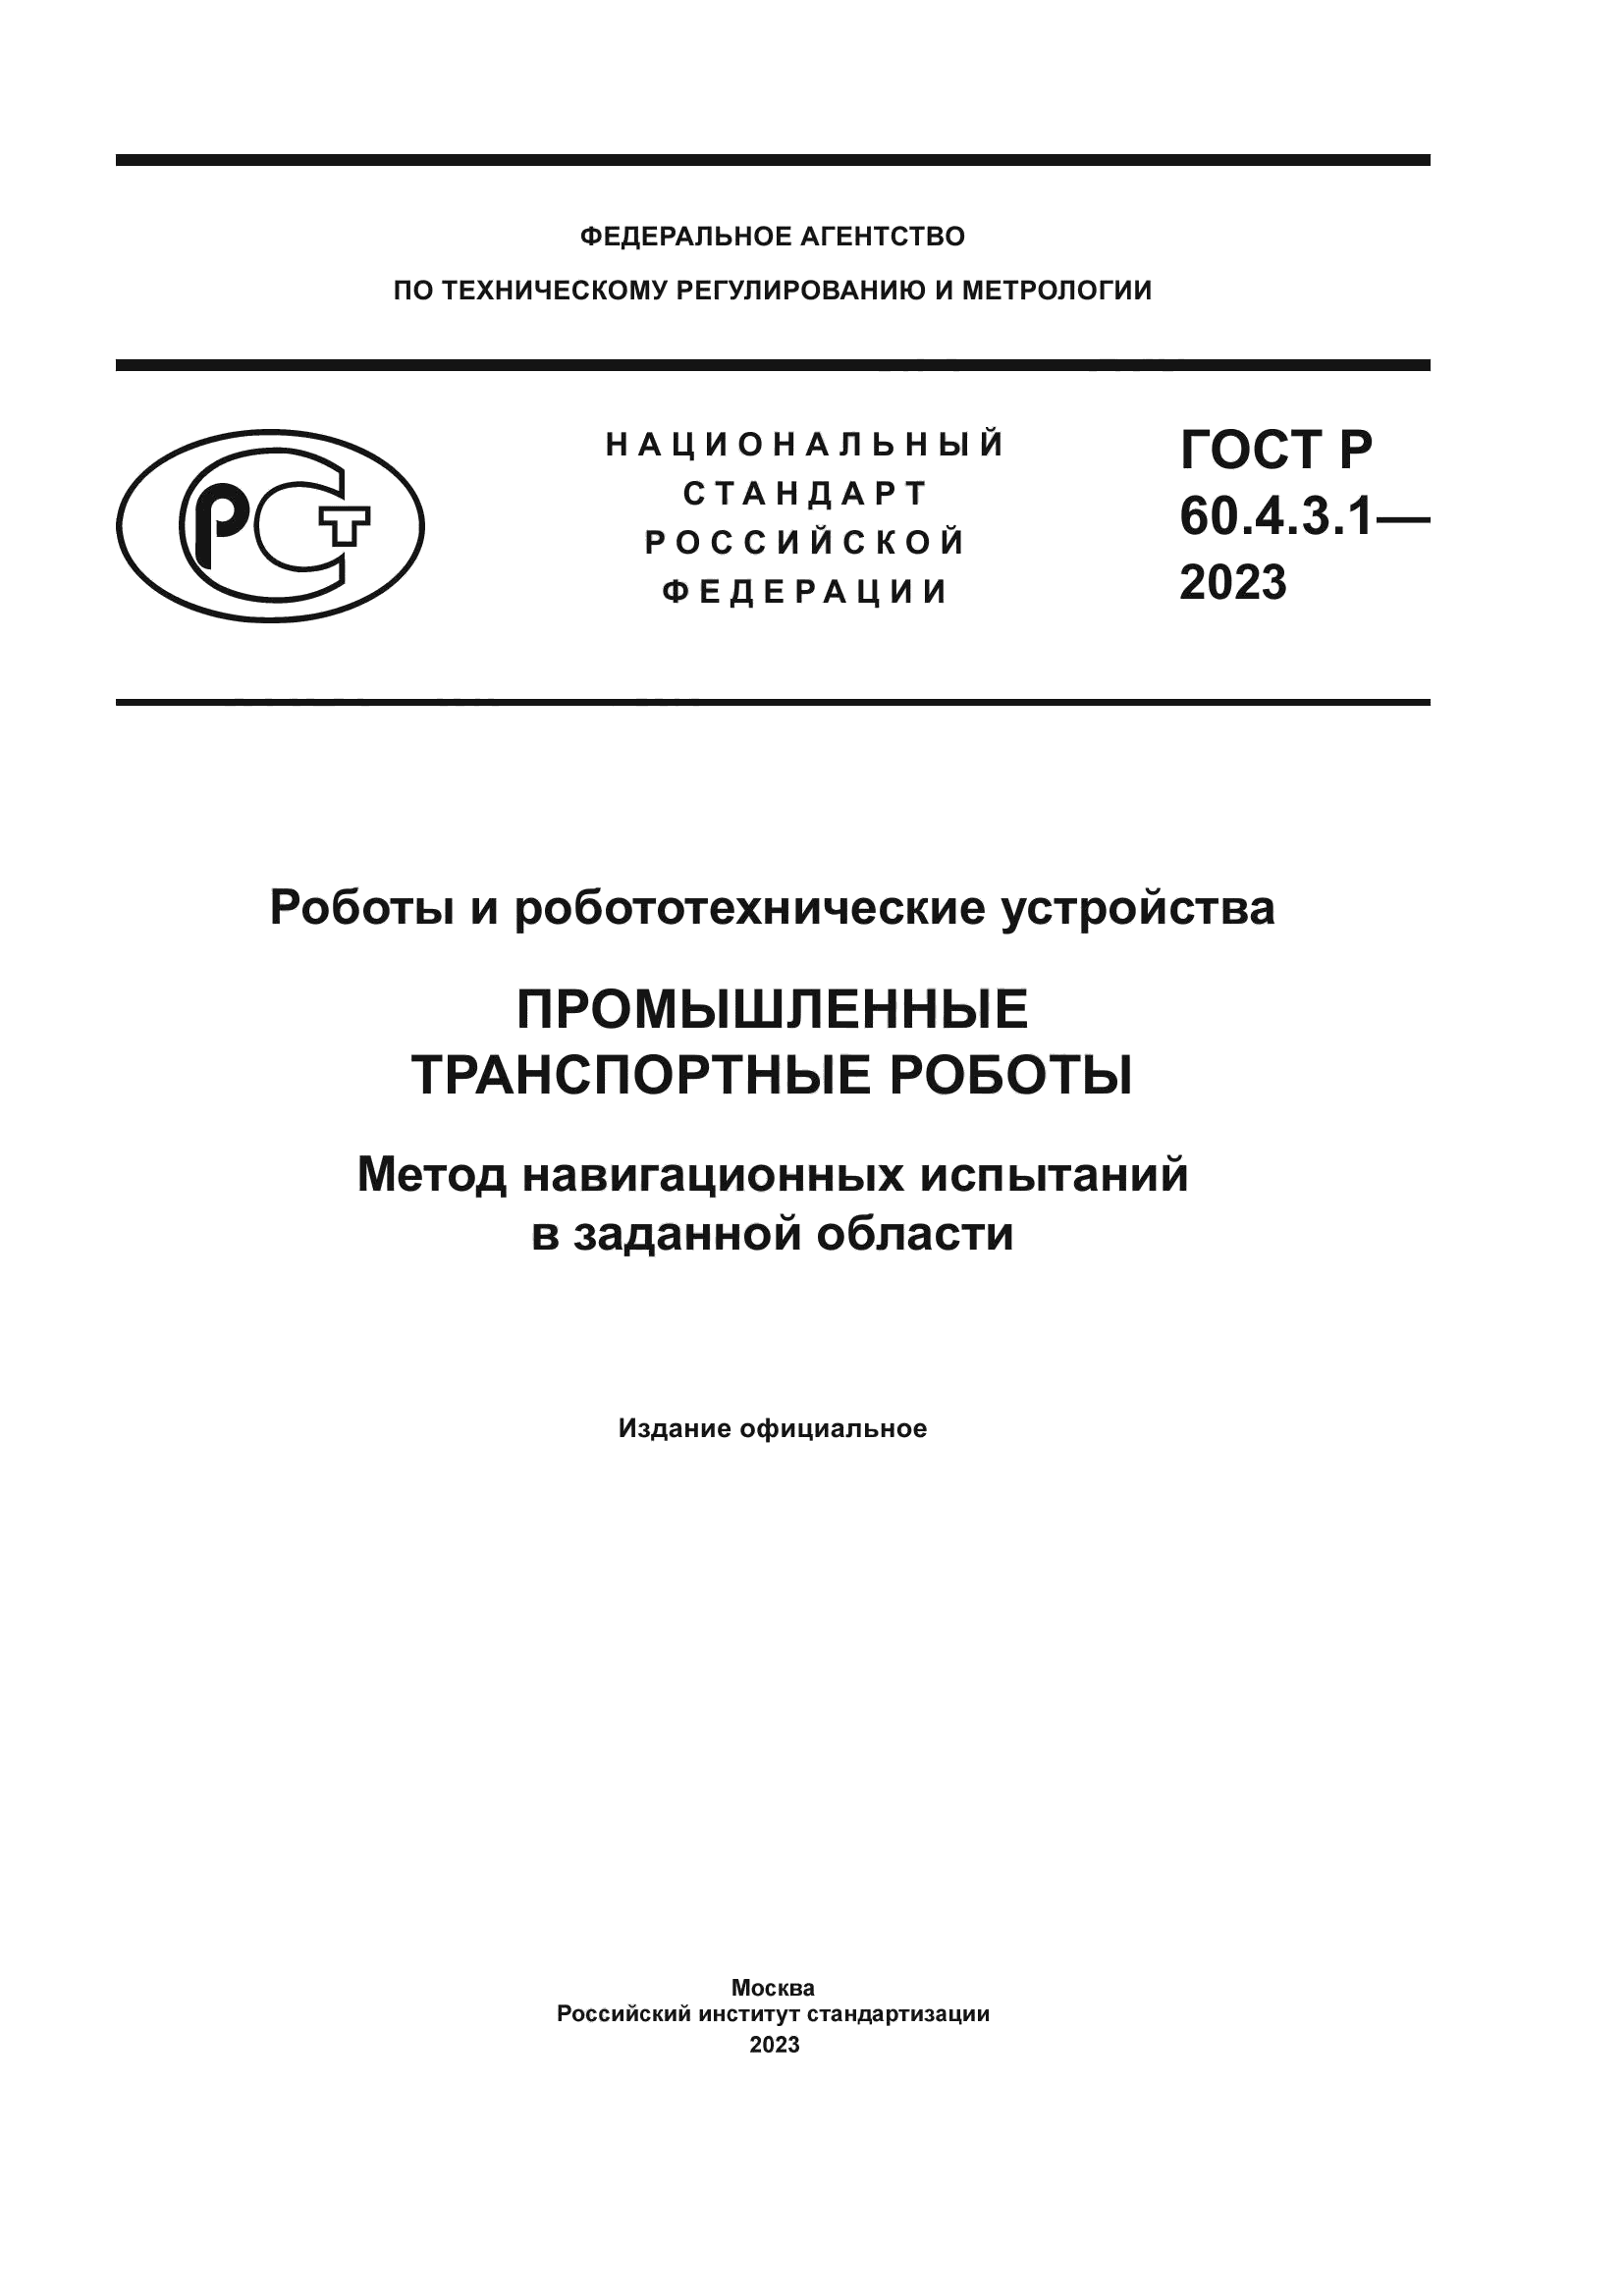 ГОСТ Р 60.4.3.1-2023